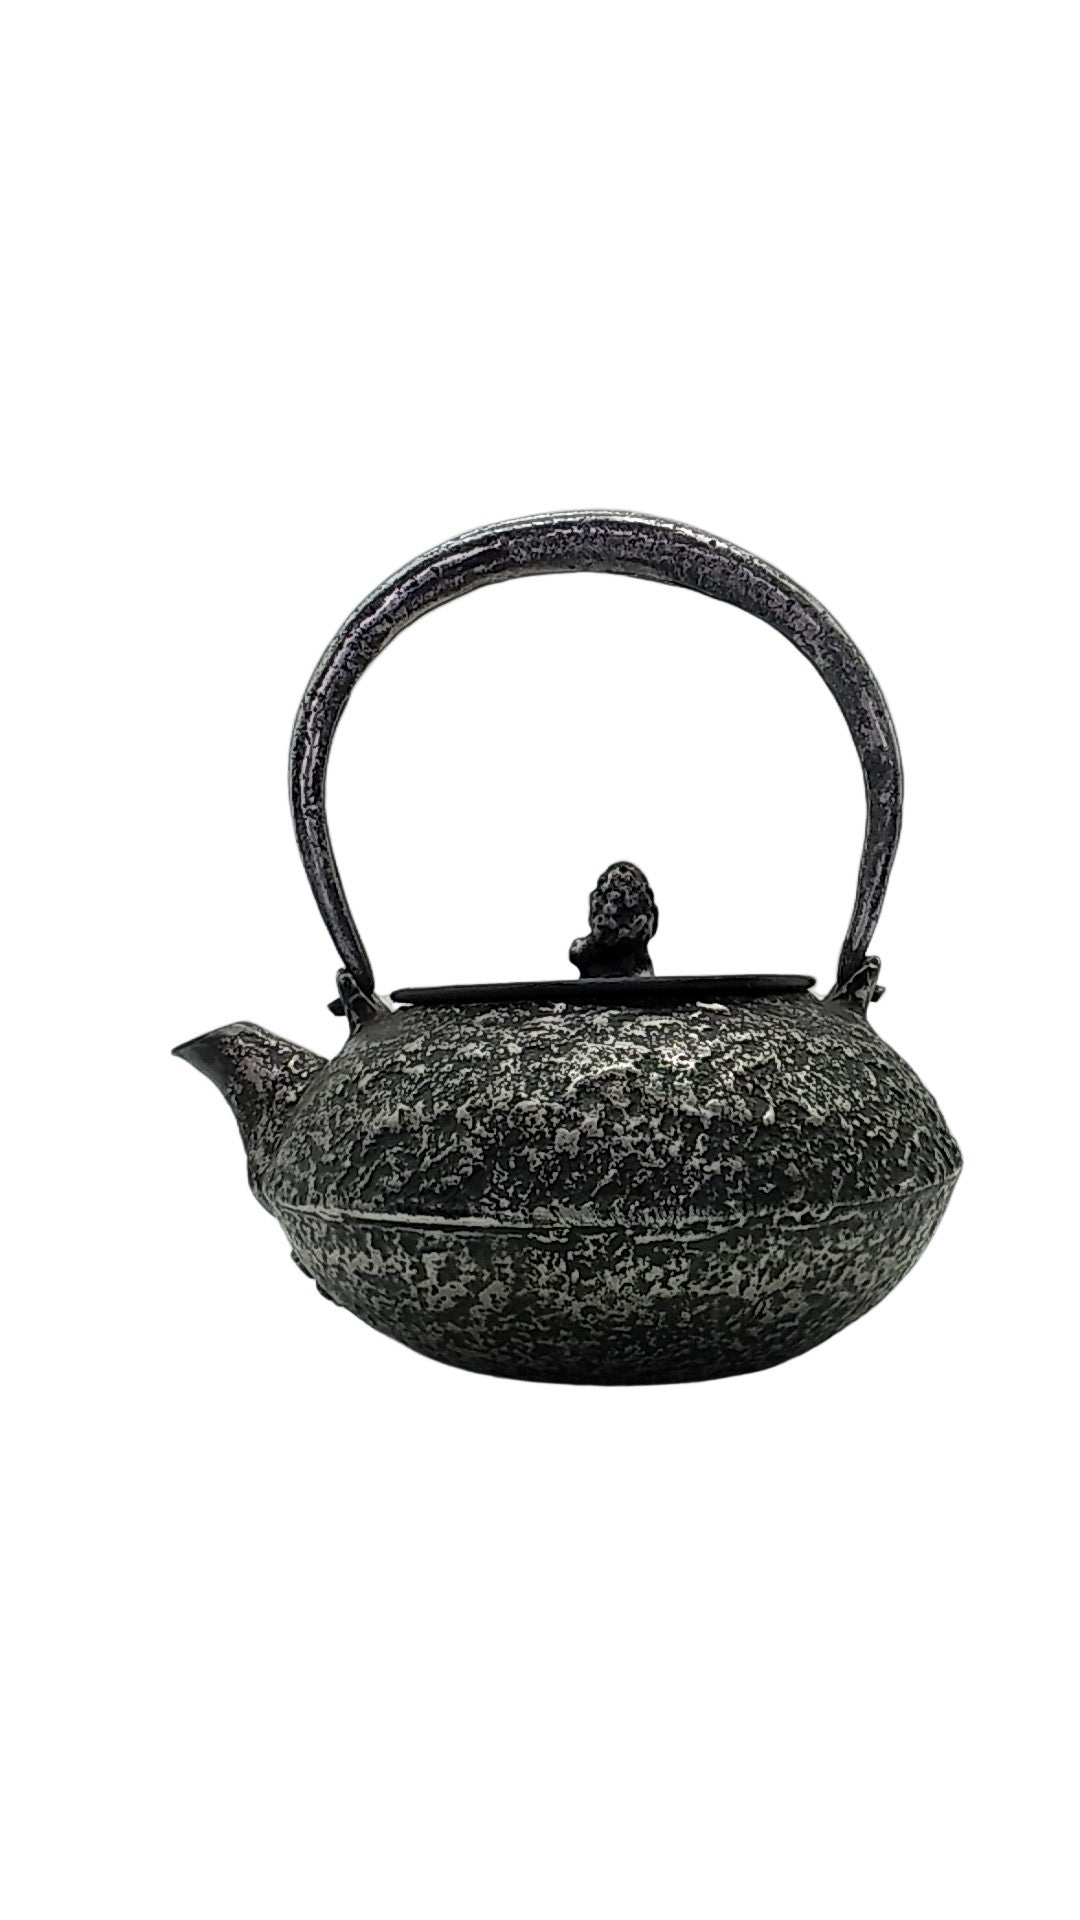 Original iron kettle -Butterfly, Size 6-